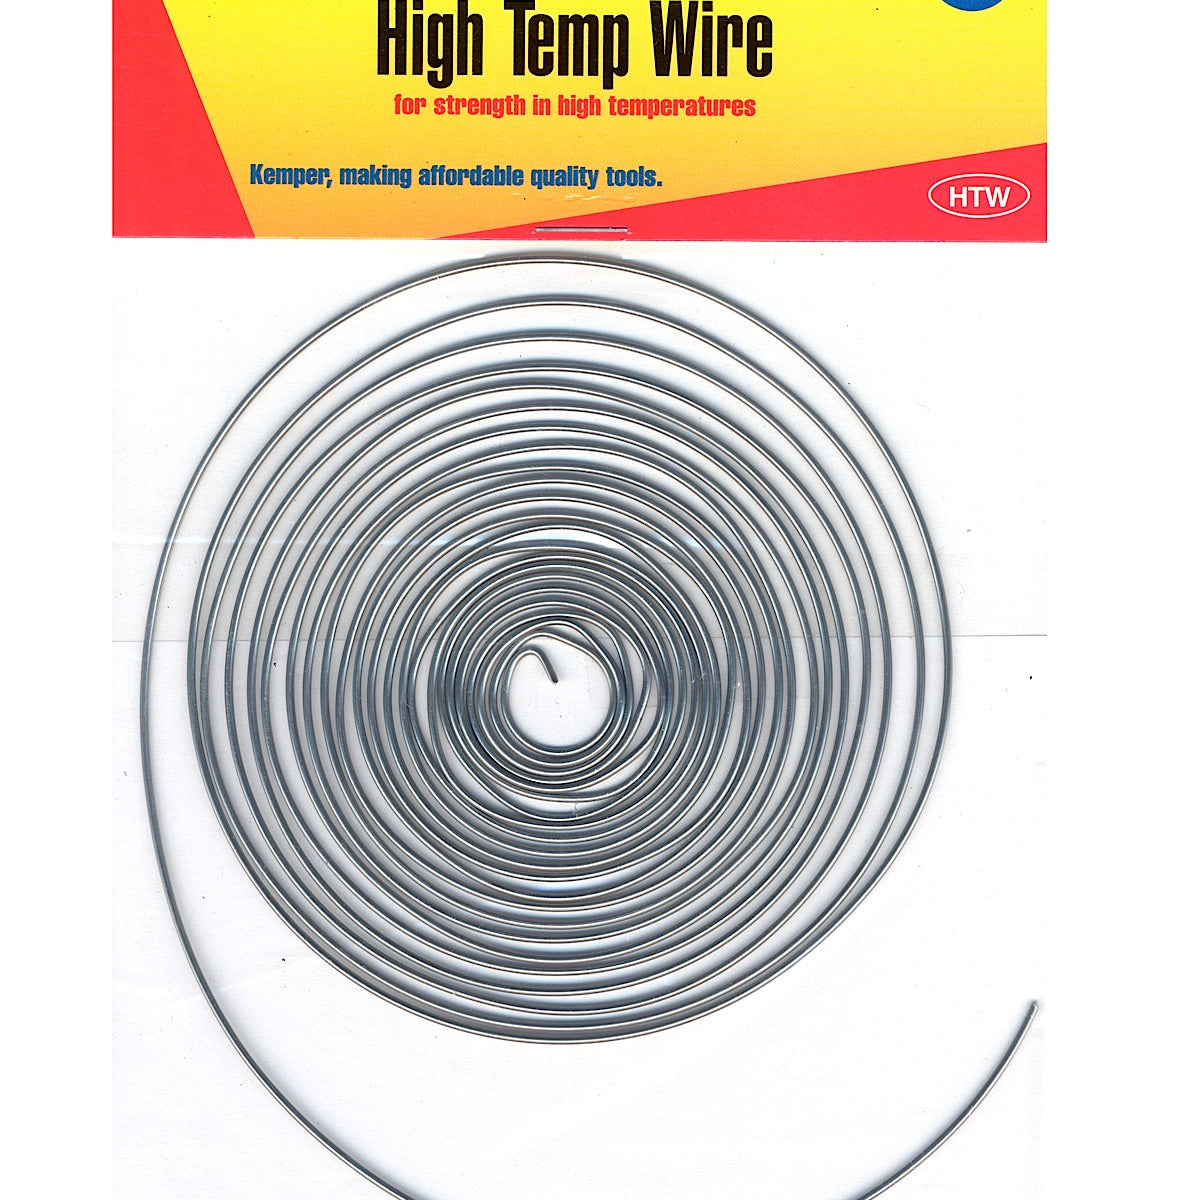 Kemper Tools High Temp Wire: 24 Gauge, 10 Feet